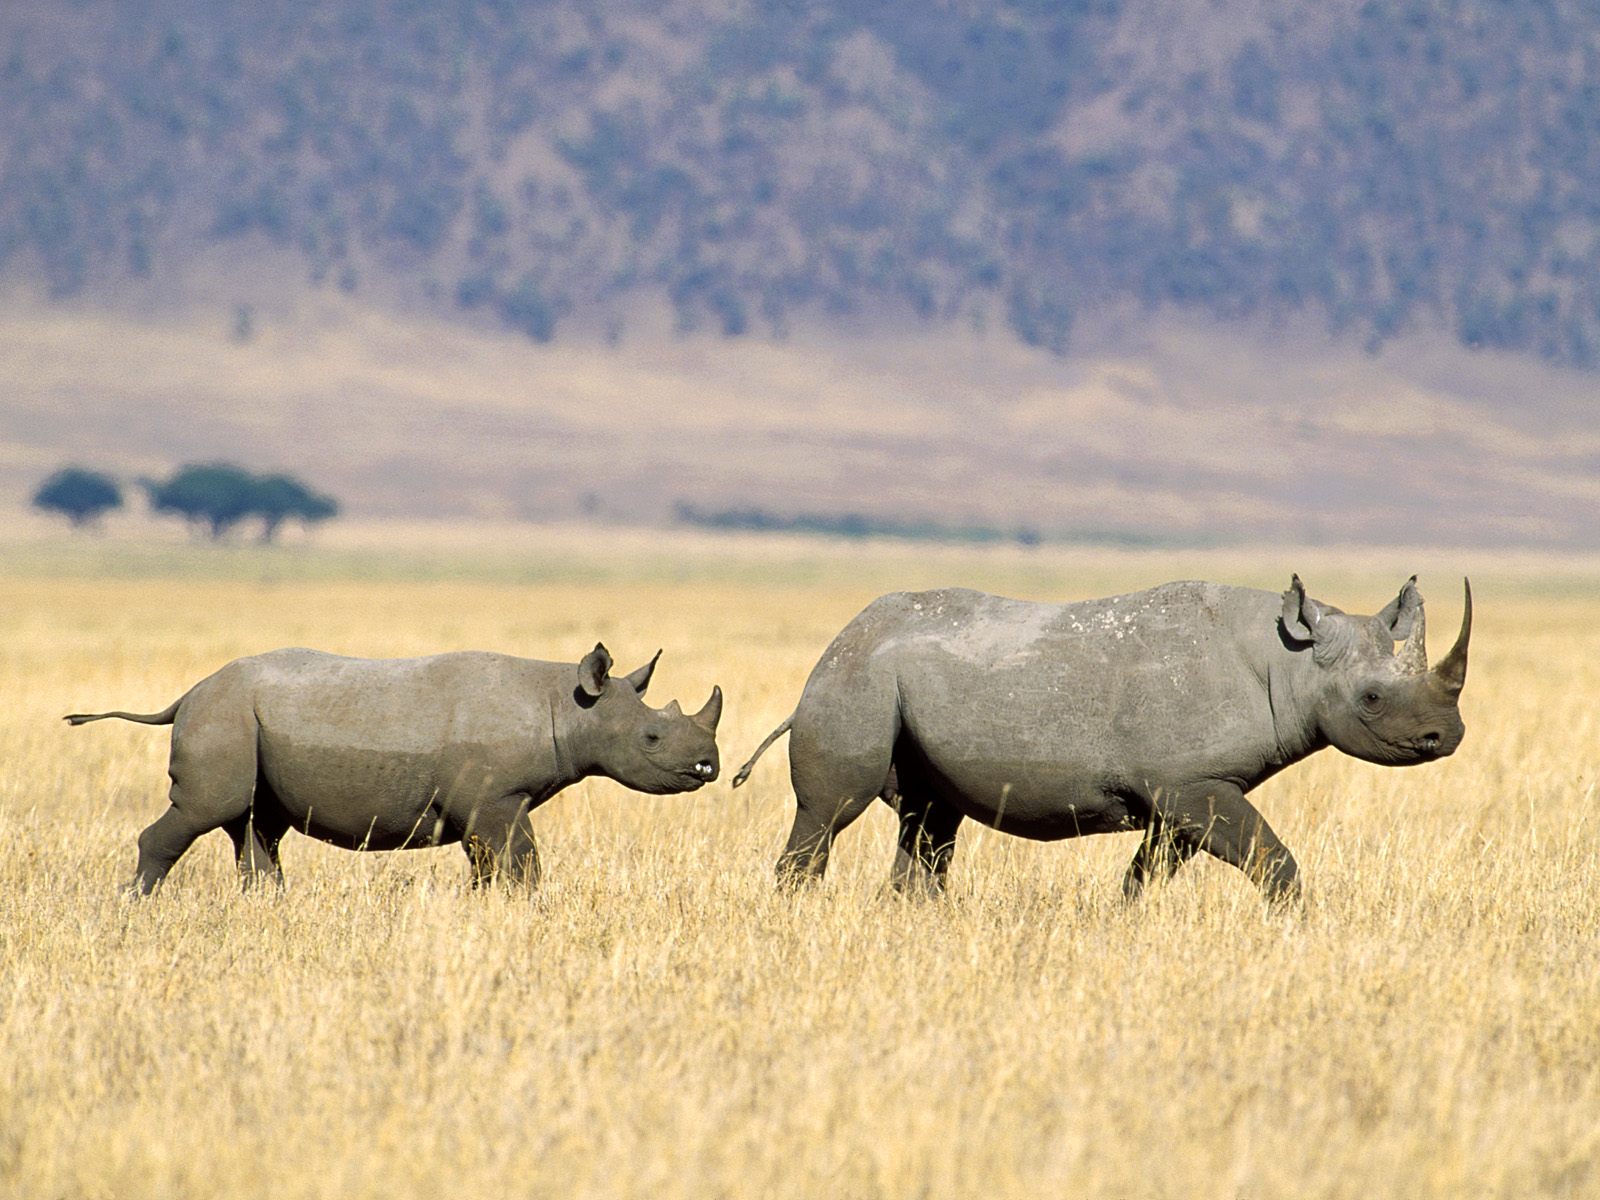 Aworan Rhinoceros